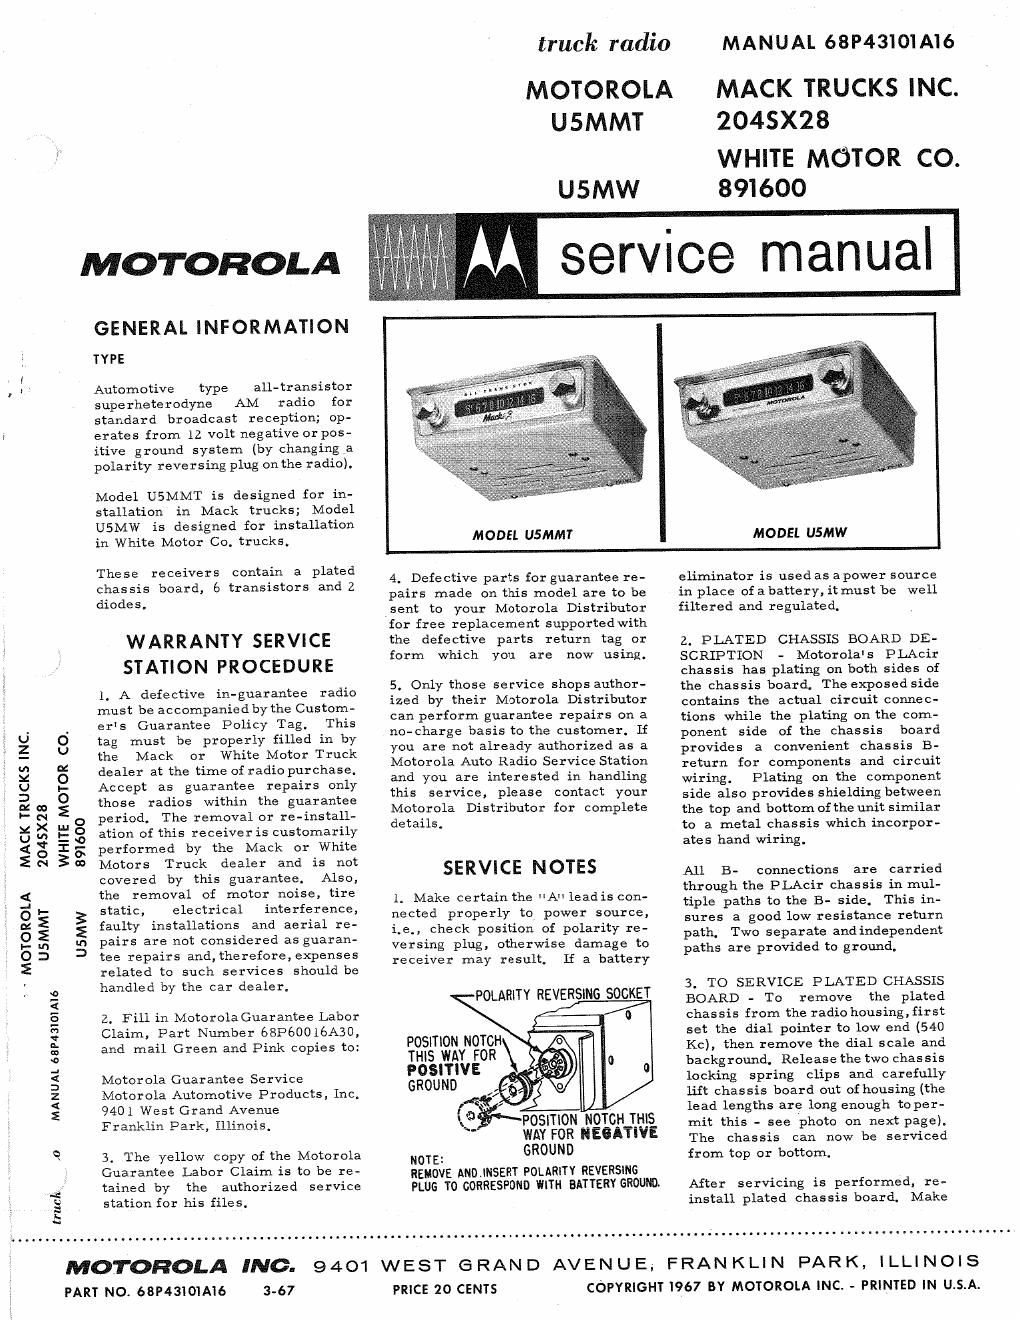 motorola u 5 mw service manual